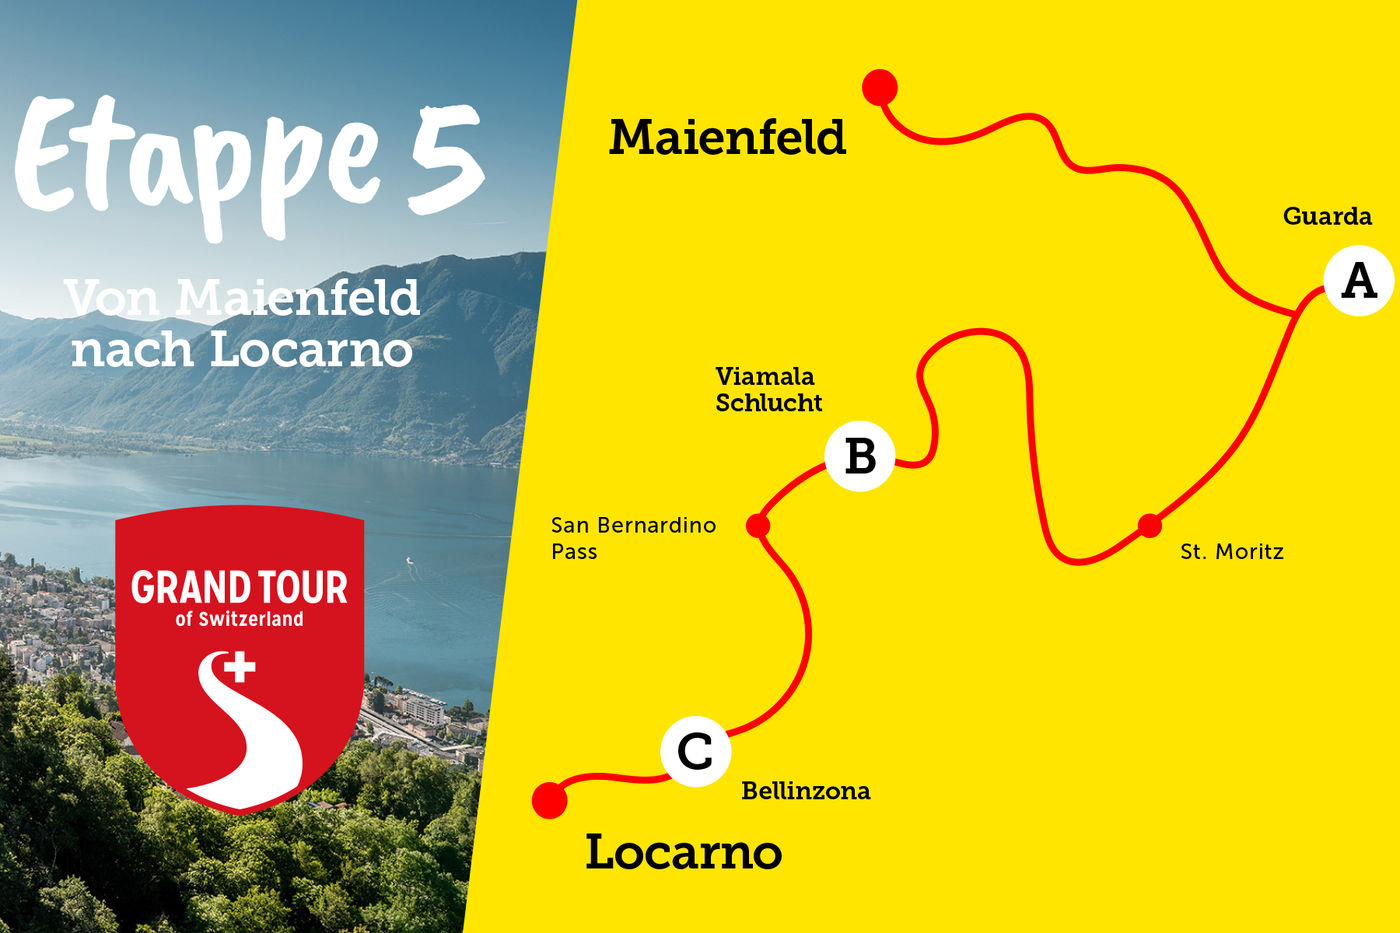 Grand Tour of Switzerland Etappe 5